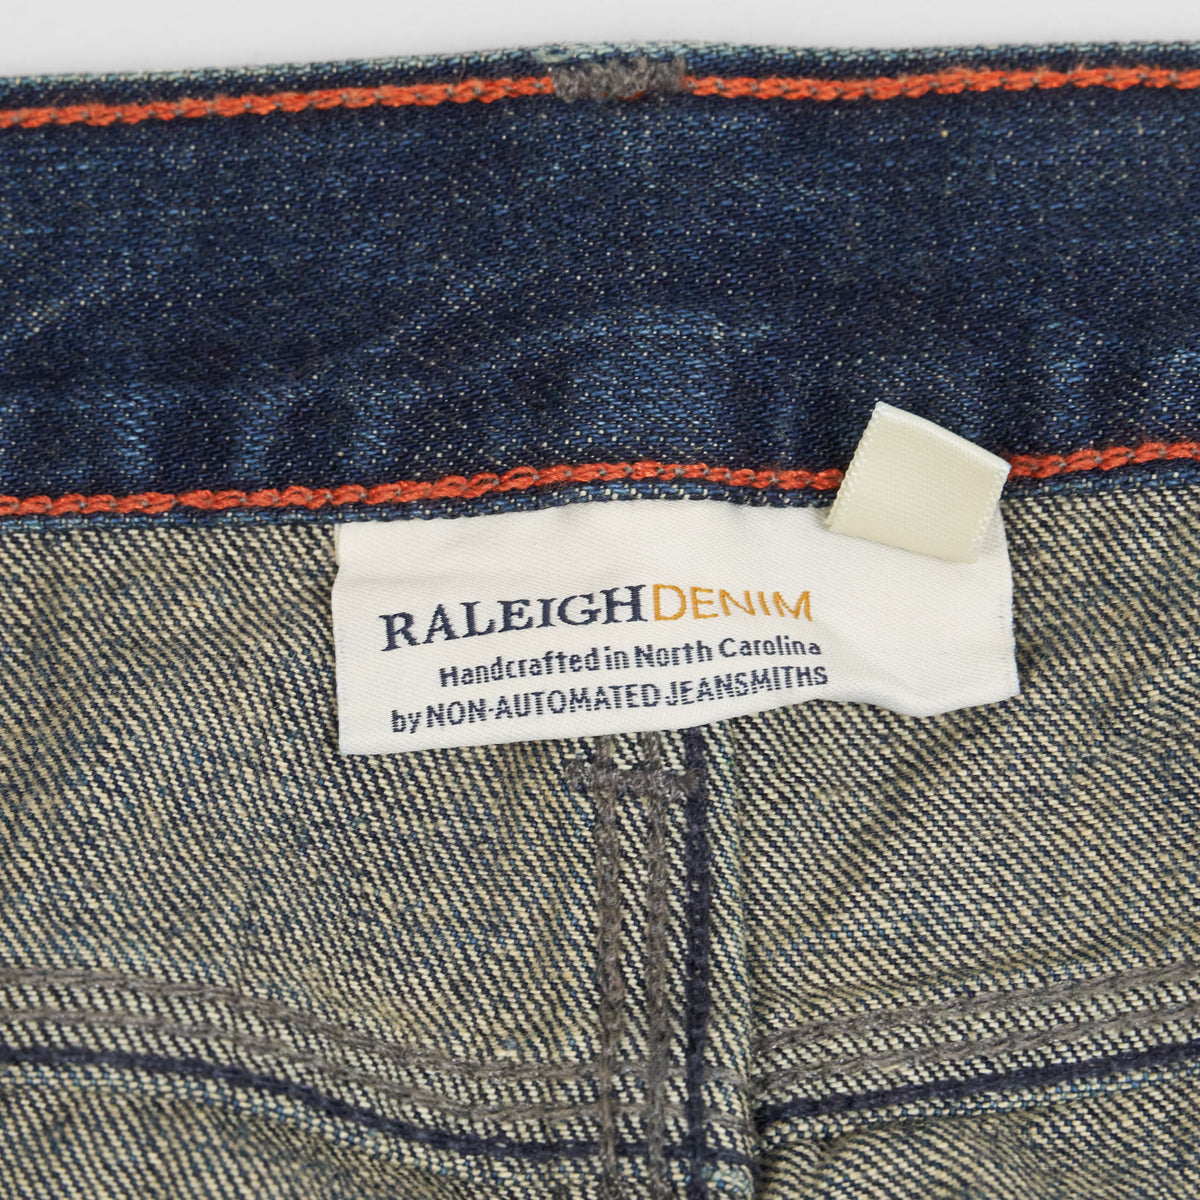 Raleigh Work  Shop Nash Jeans